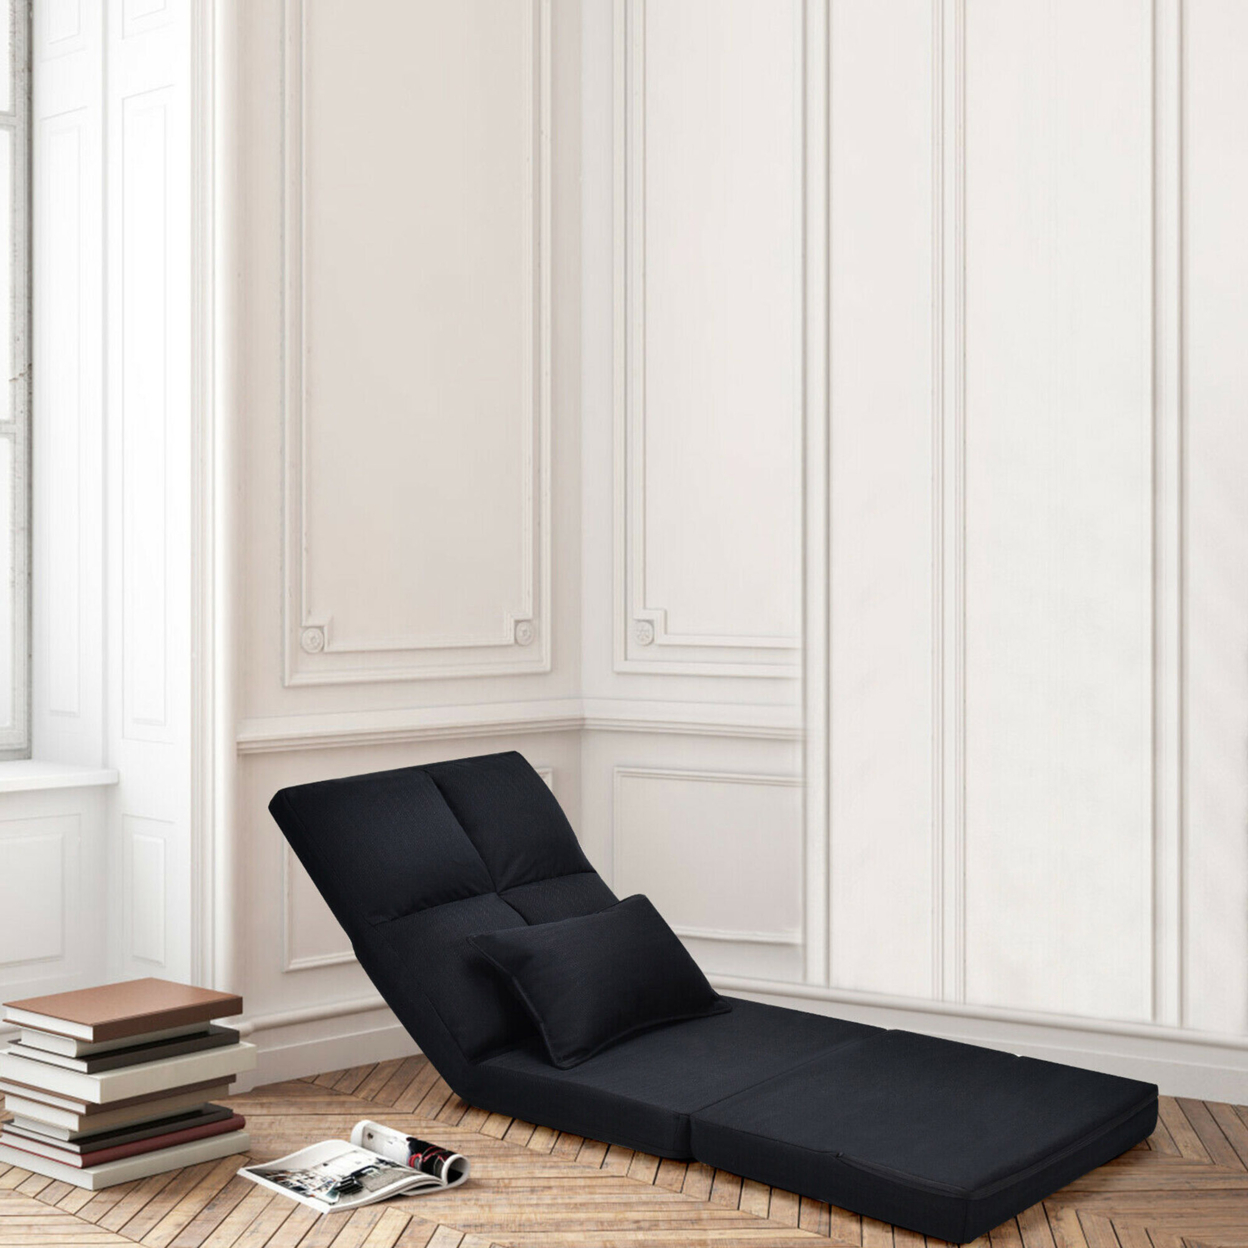 Flip Chair Convertible Sleeper Couch Futon Bed Lounger W/Pillow Black